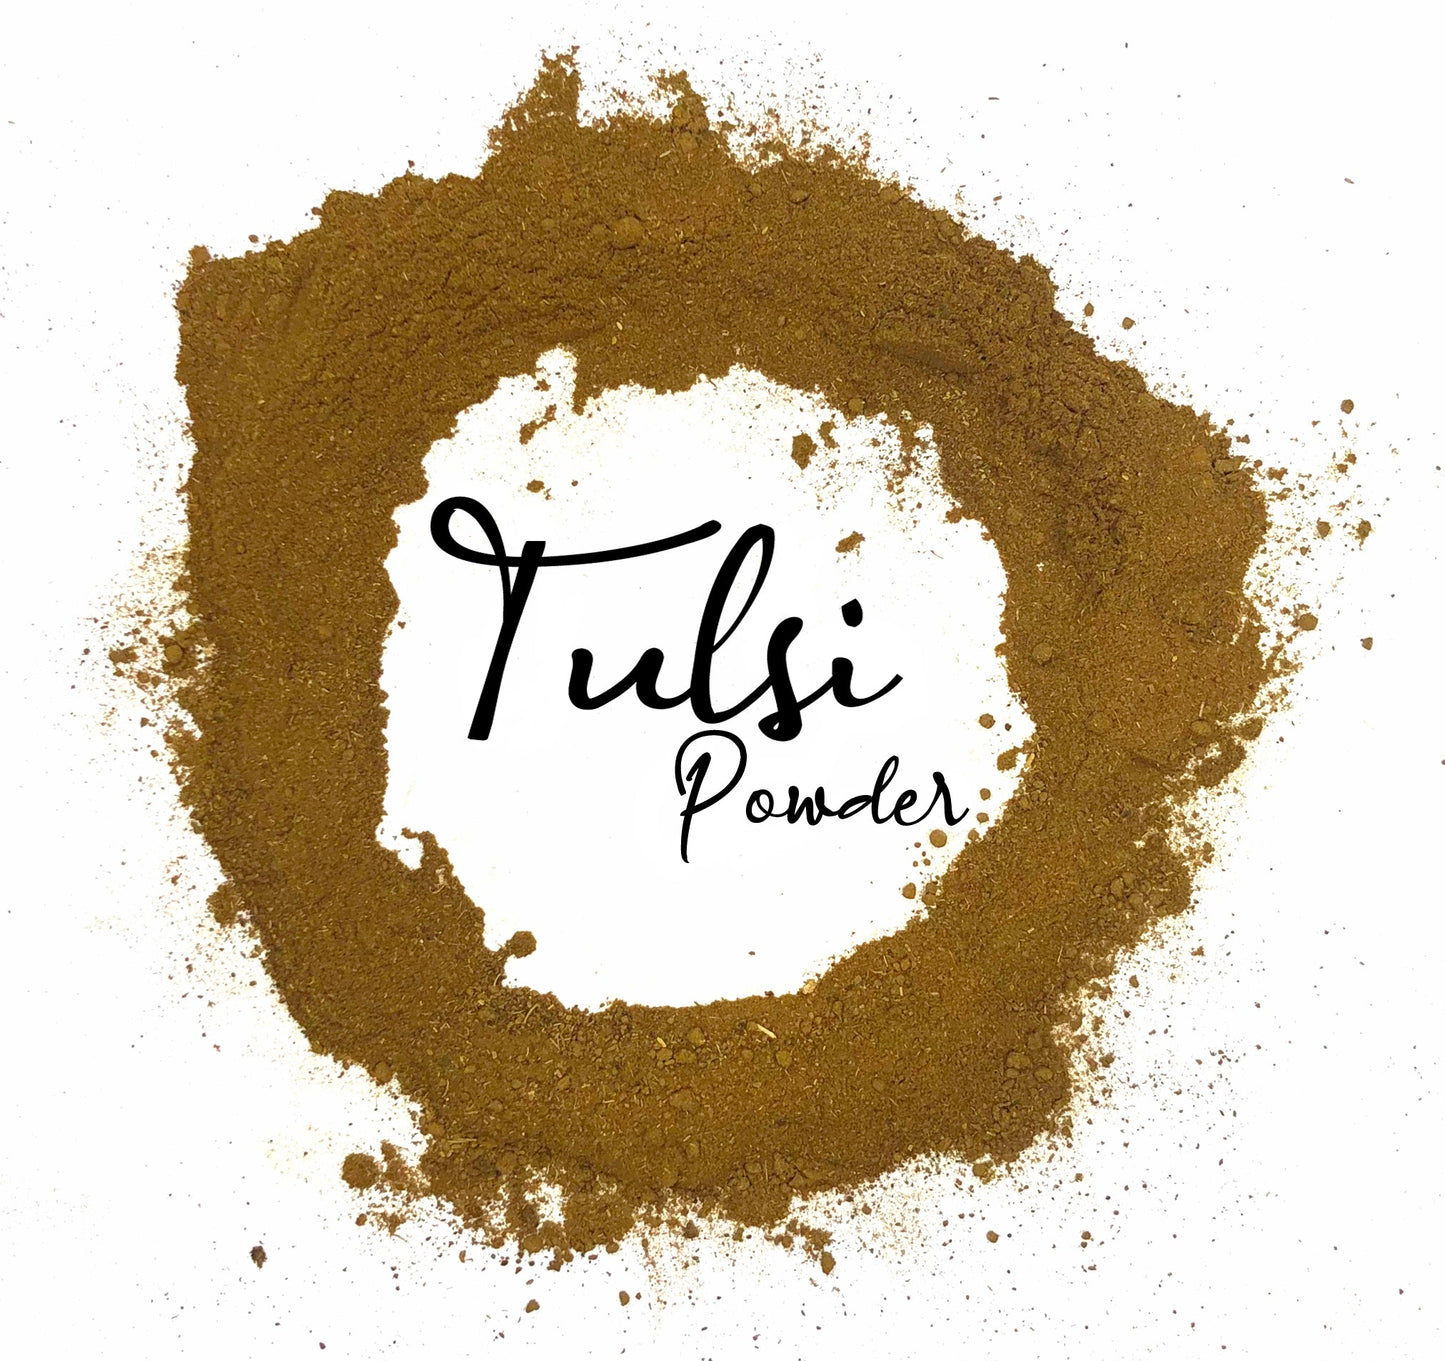 Wholesale Spices & Herbs - Tulsi Powder, Organic 3.6 oz (103.5g) Jar